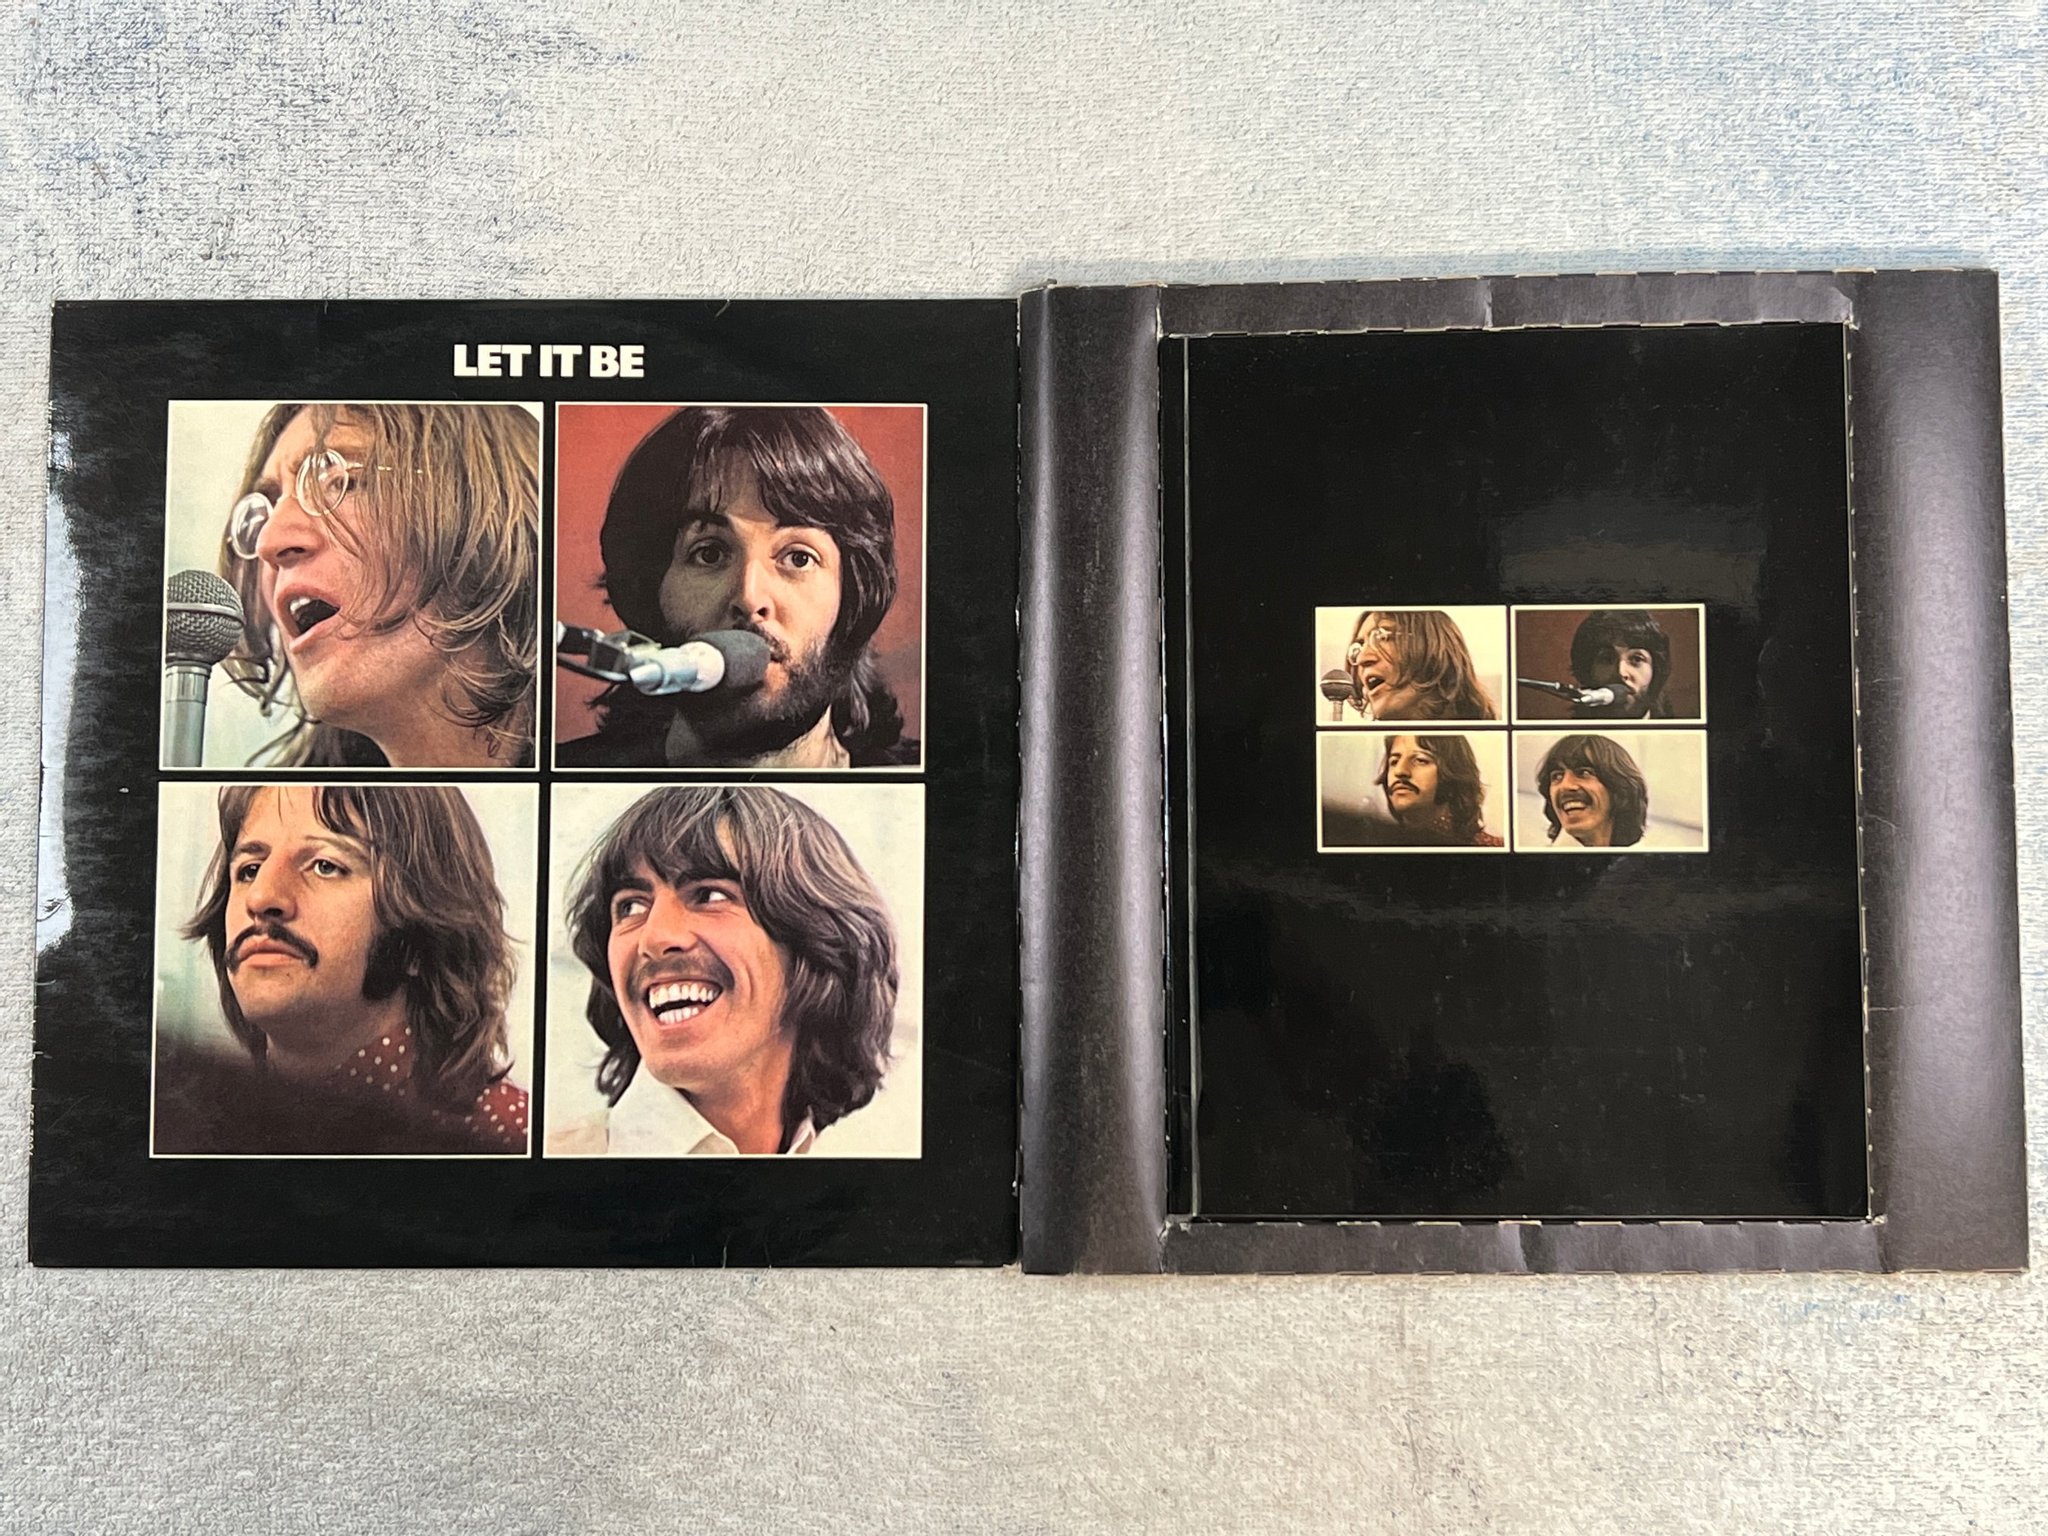 Omslagsbild för skivan THE BEATLES let it be LP + box + book -70 UK APPLE PXS 1